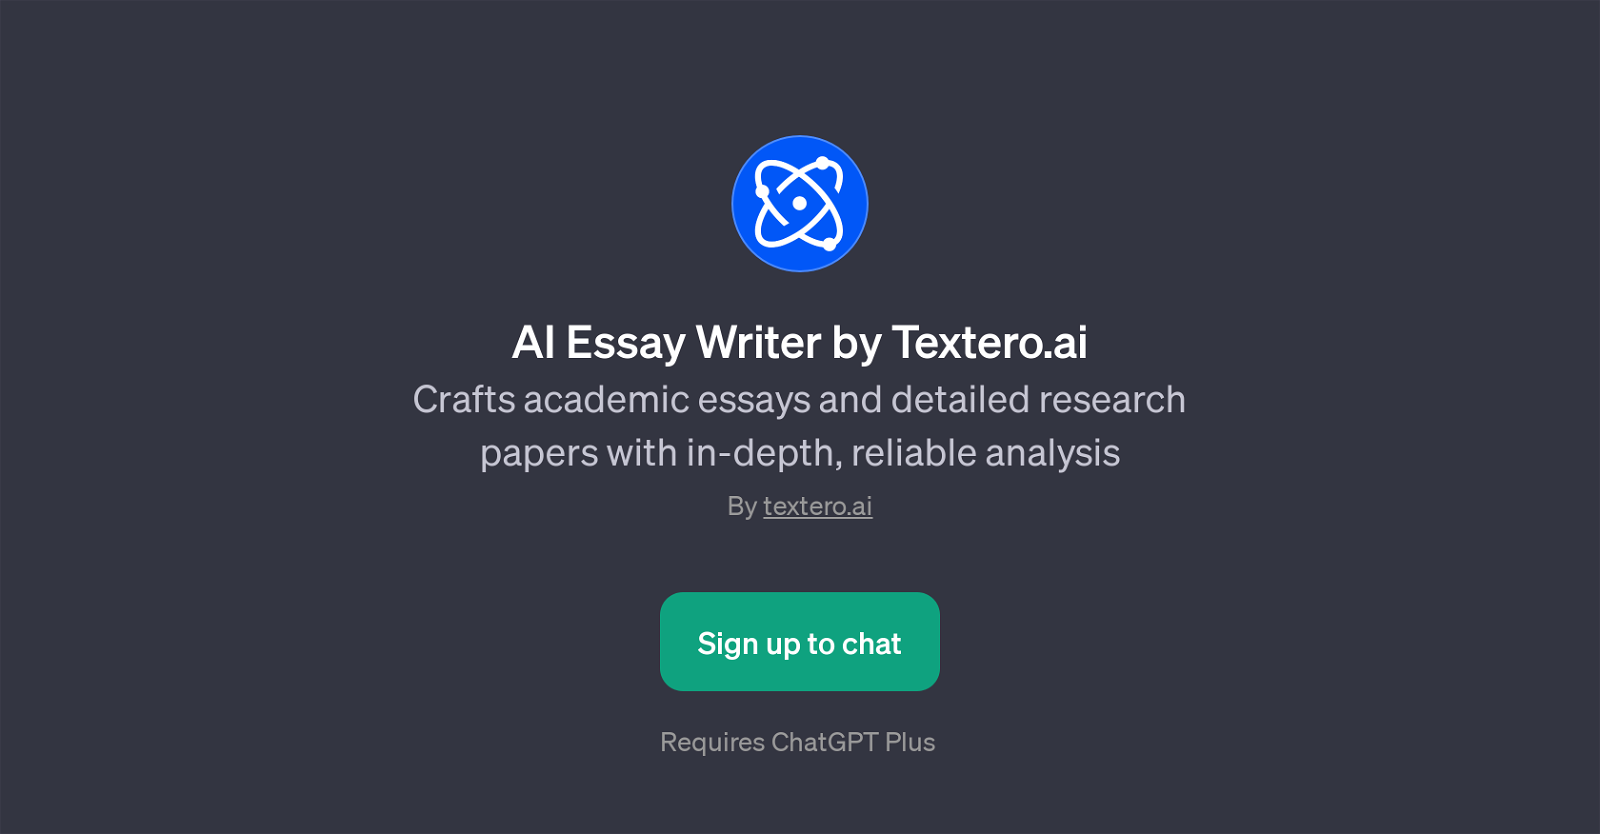 AI Essay Writer by Textero.ai website